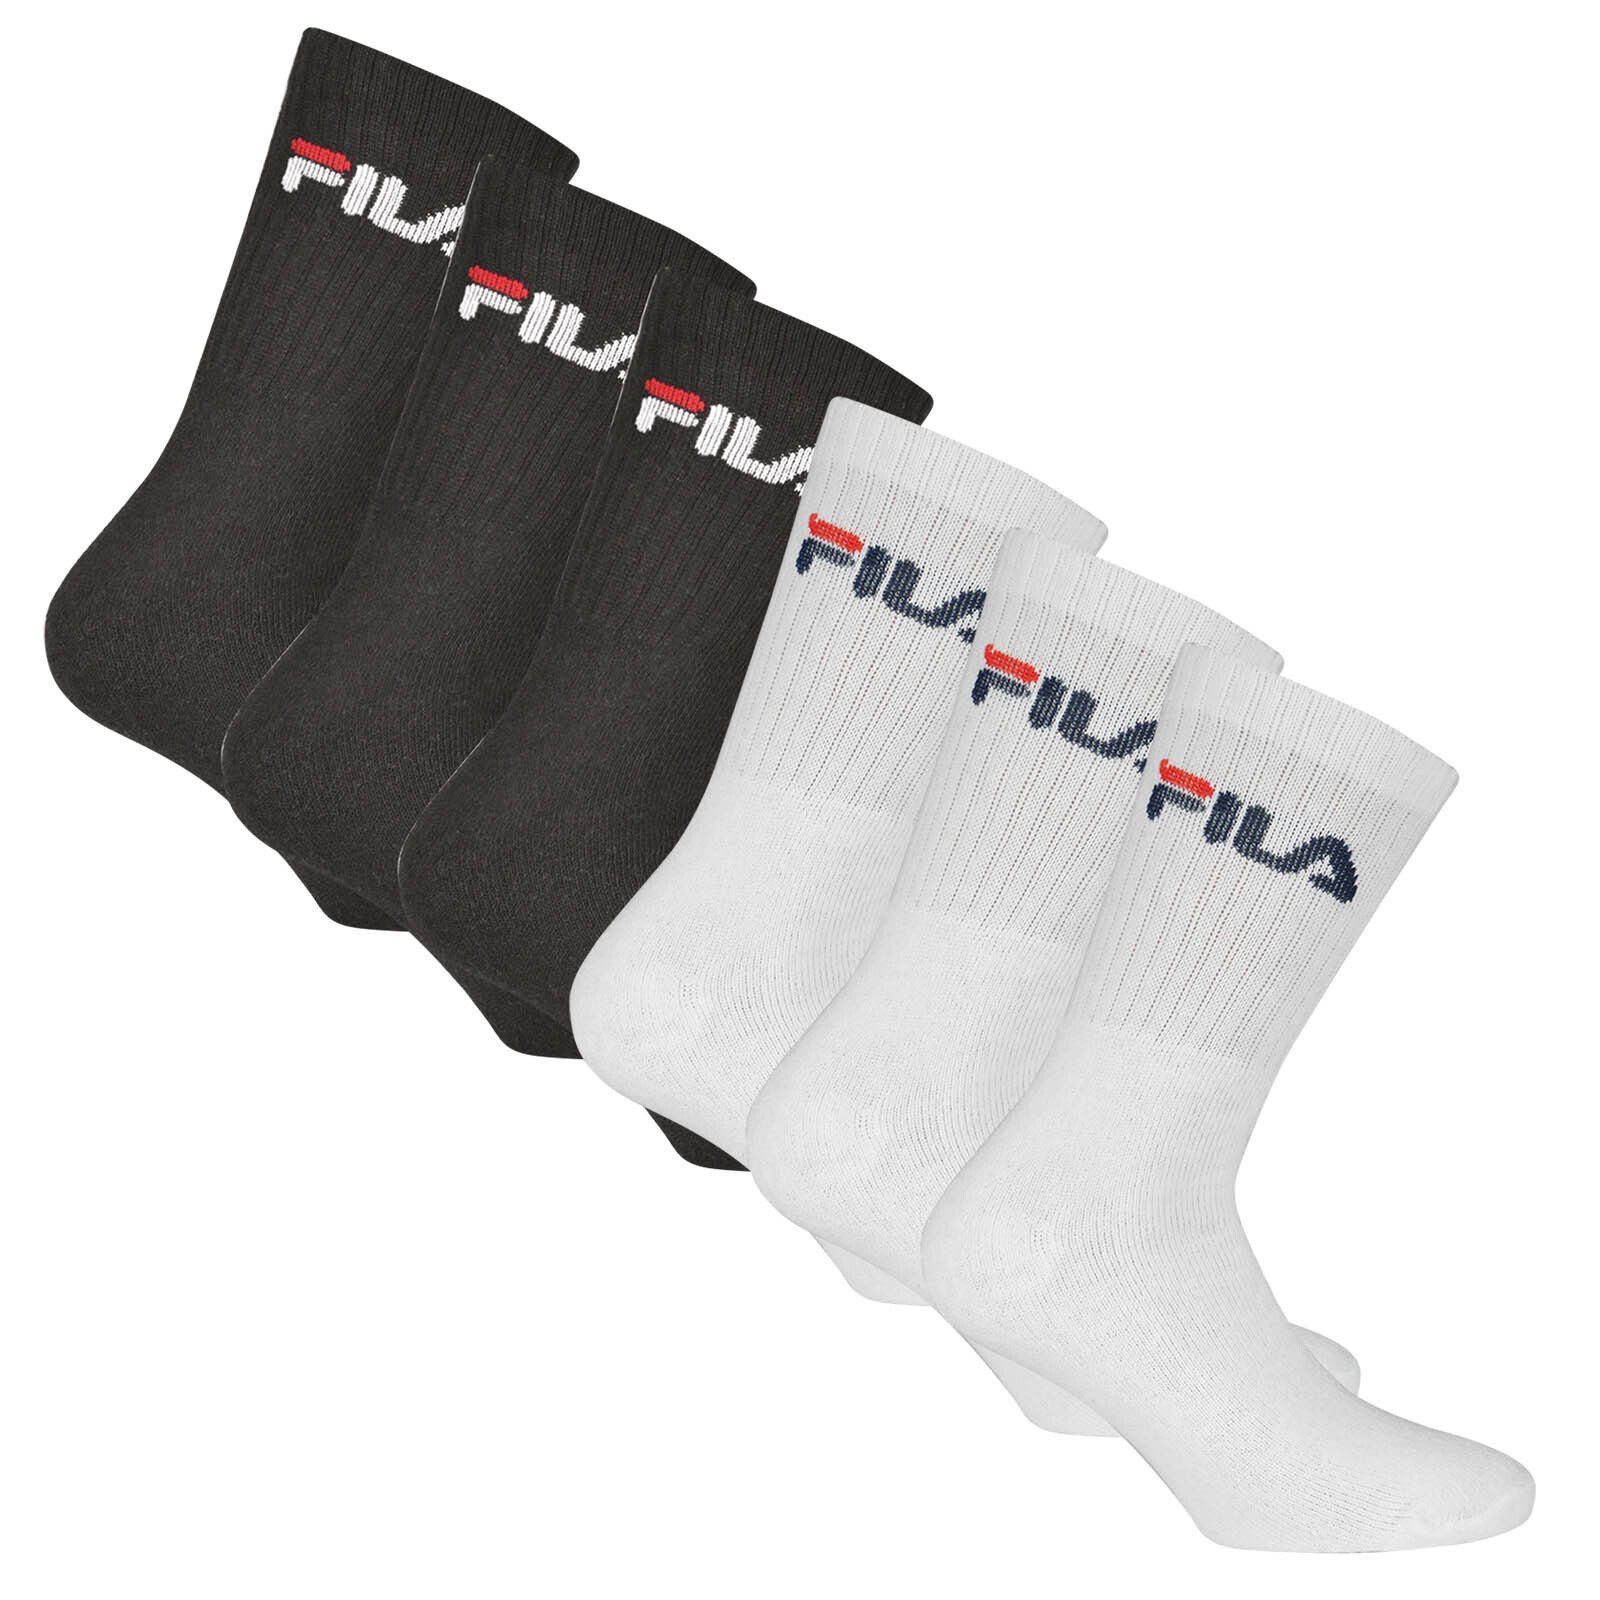 Schwarz/Weiß Socks, Fila 6er Sportsocken Pack Socken, - Unisex Frottee Crew